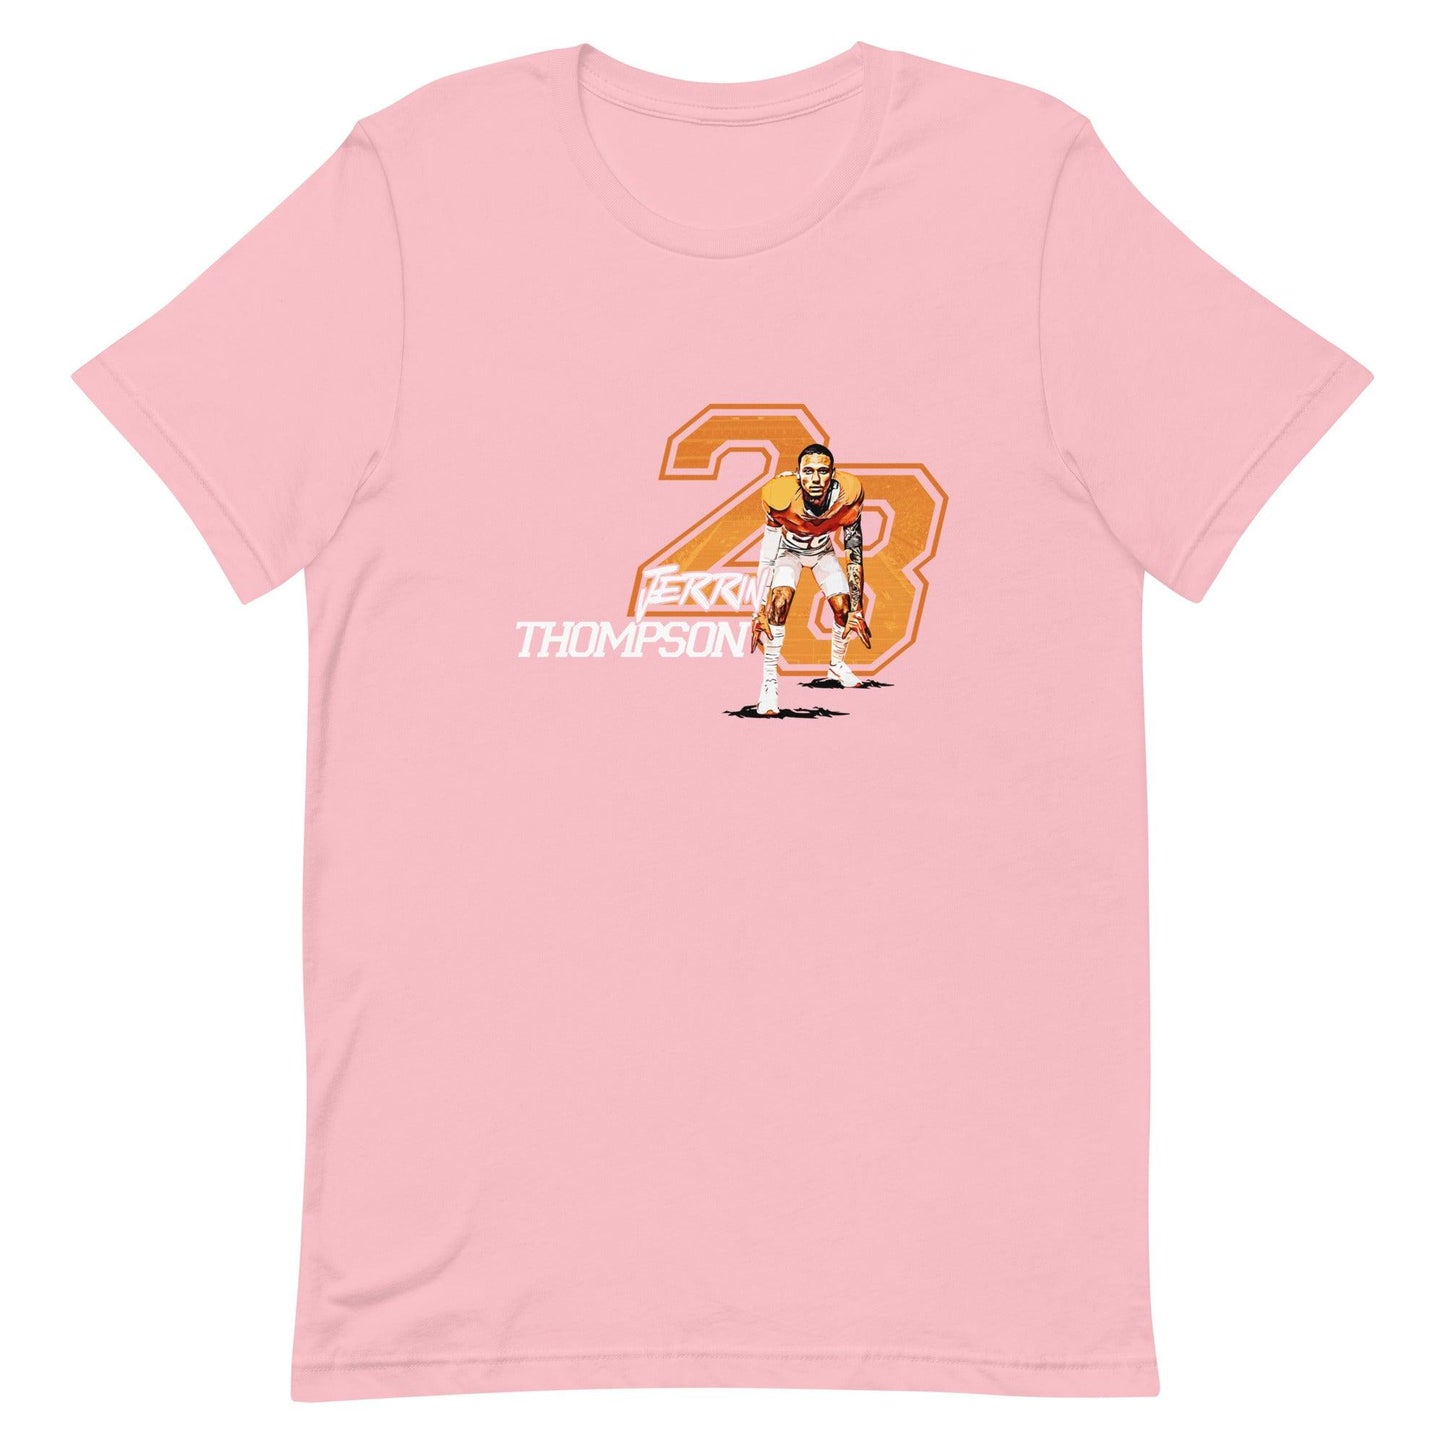 Jerrin Thompson "Gameday" t-shirt - Fan Arch